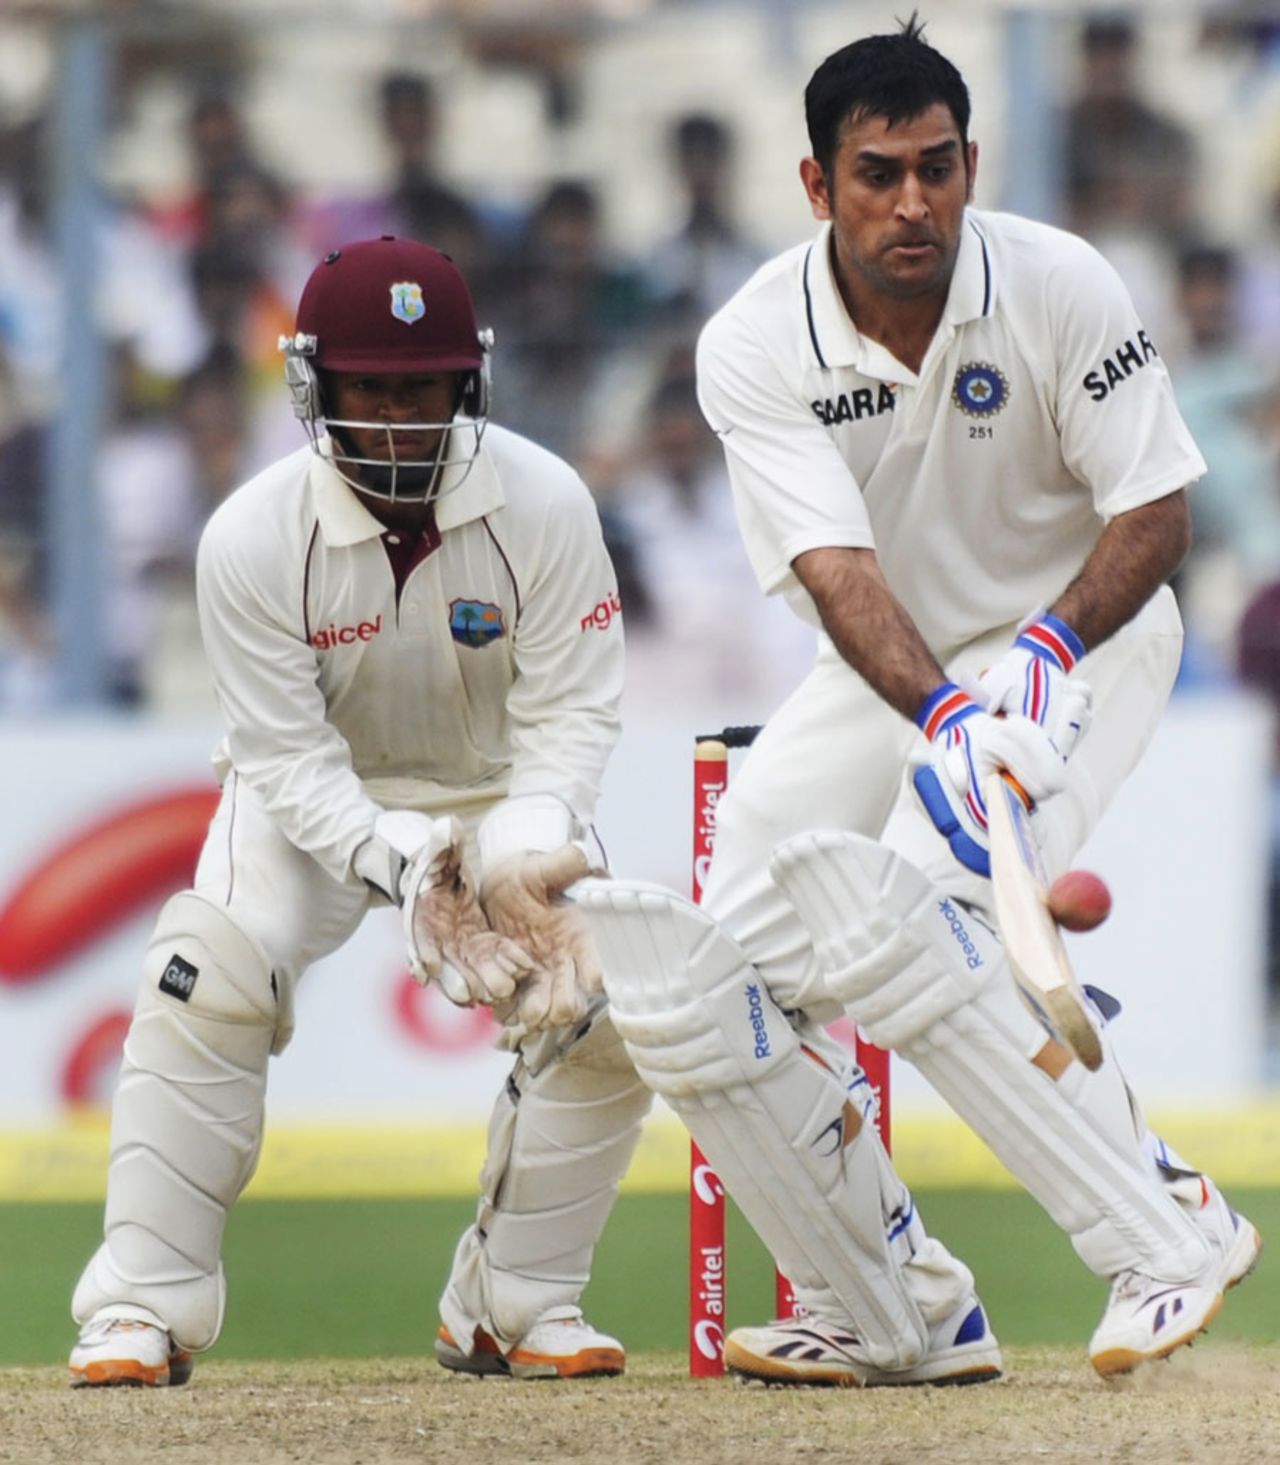 MS Dhoni plays an unorthodox shot, India v West Indies, 2nd Test, Kolkata, 2nd day, November 15, 2011